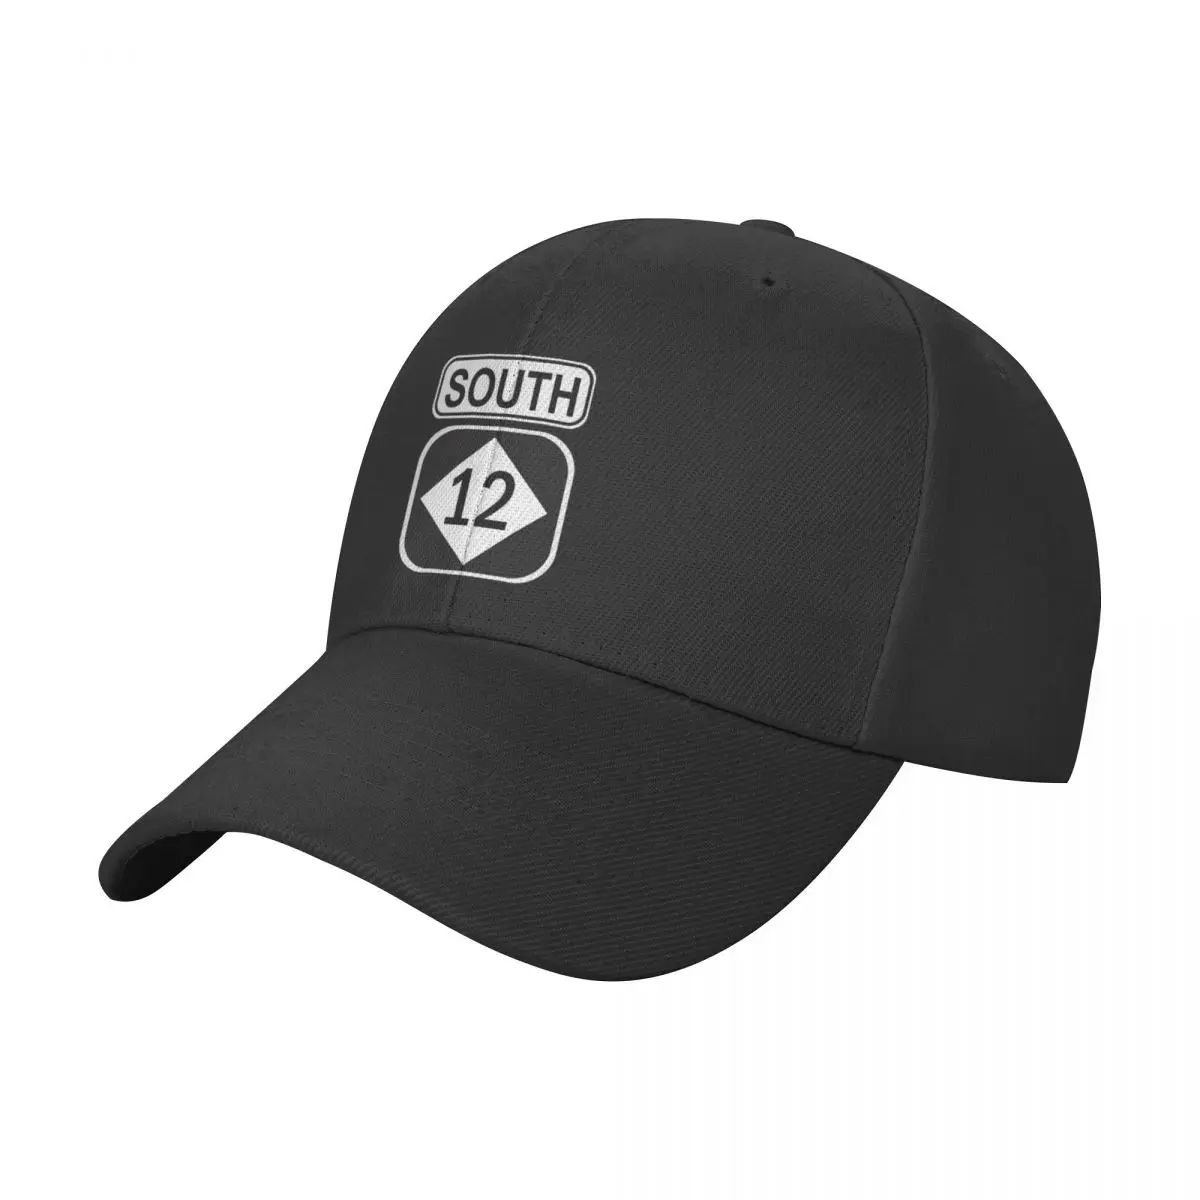 

Highway South 12 Outer Banks North Carolina Baseball Cap tea hats Golf Wear Caps For Women Men's